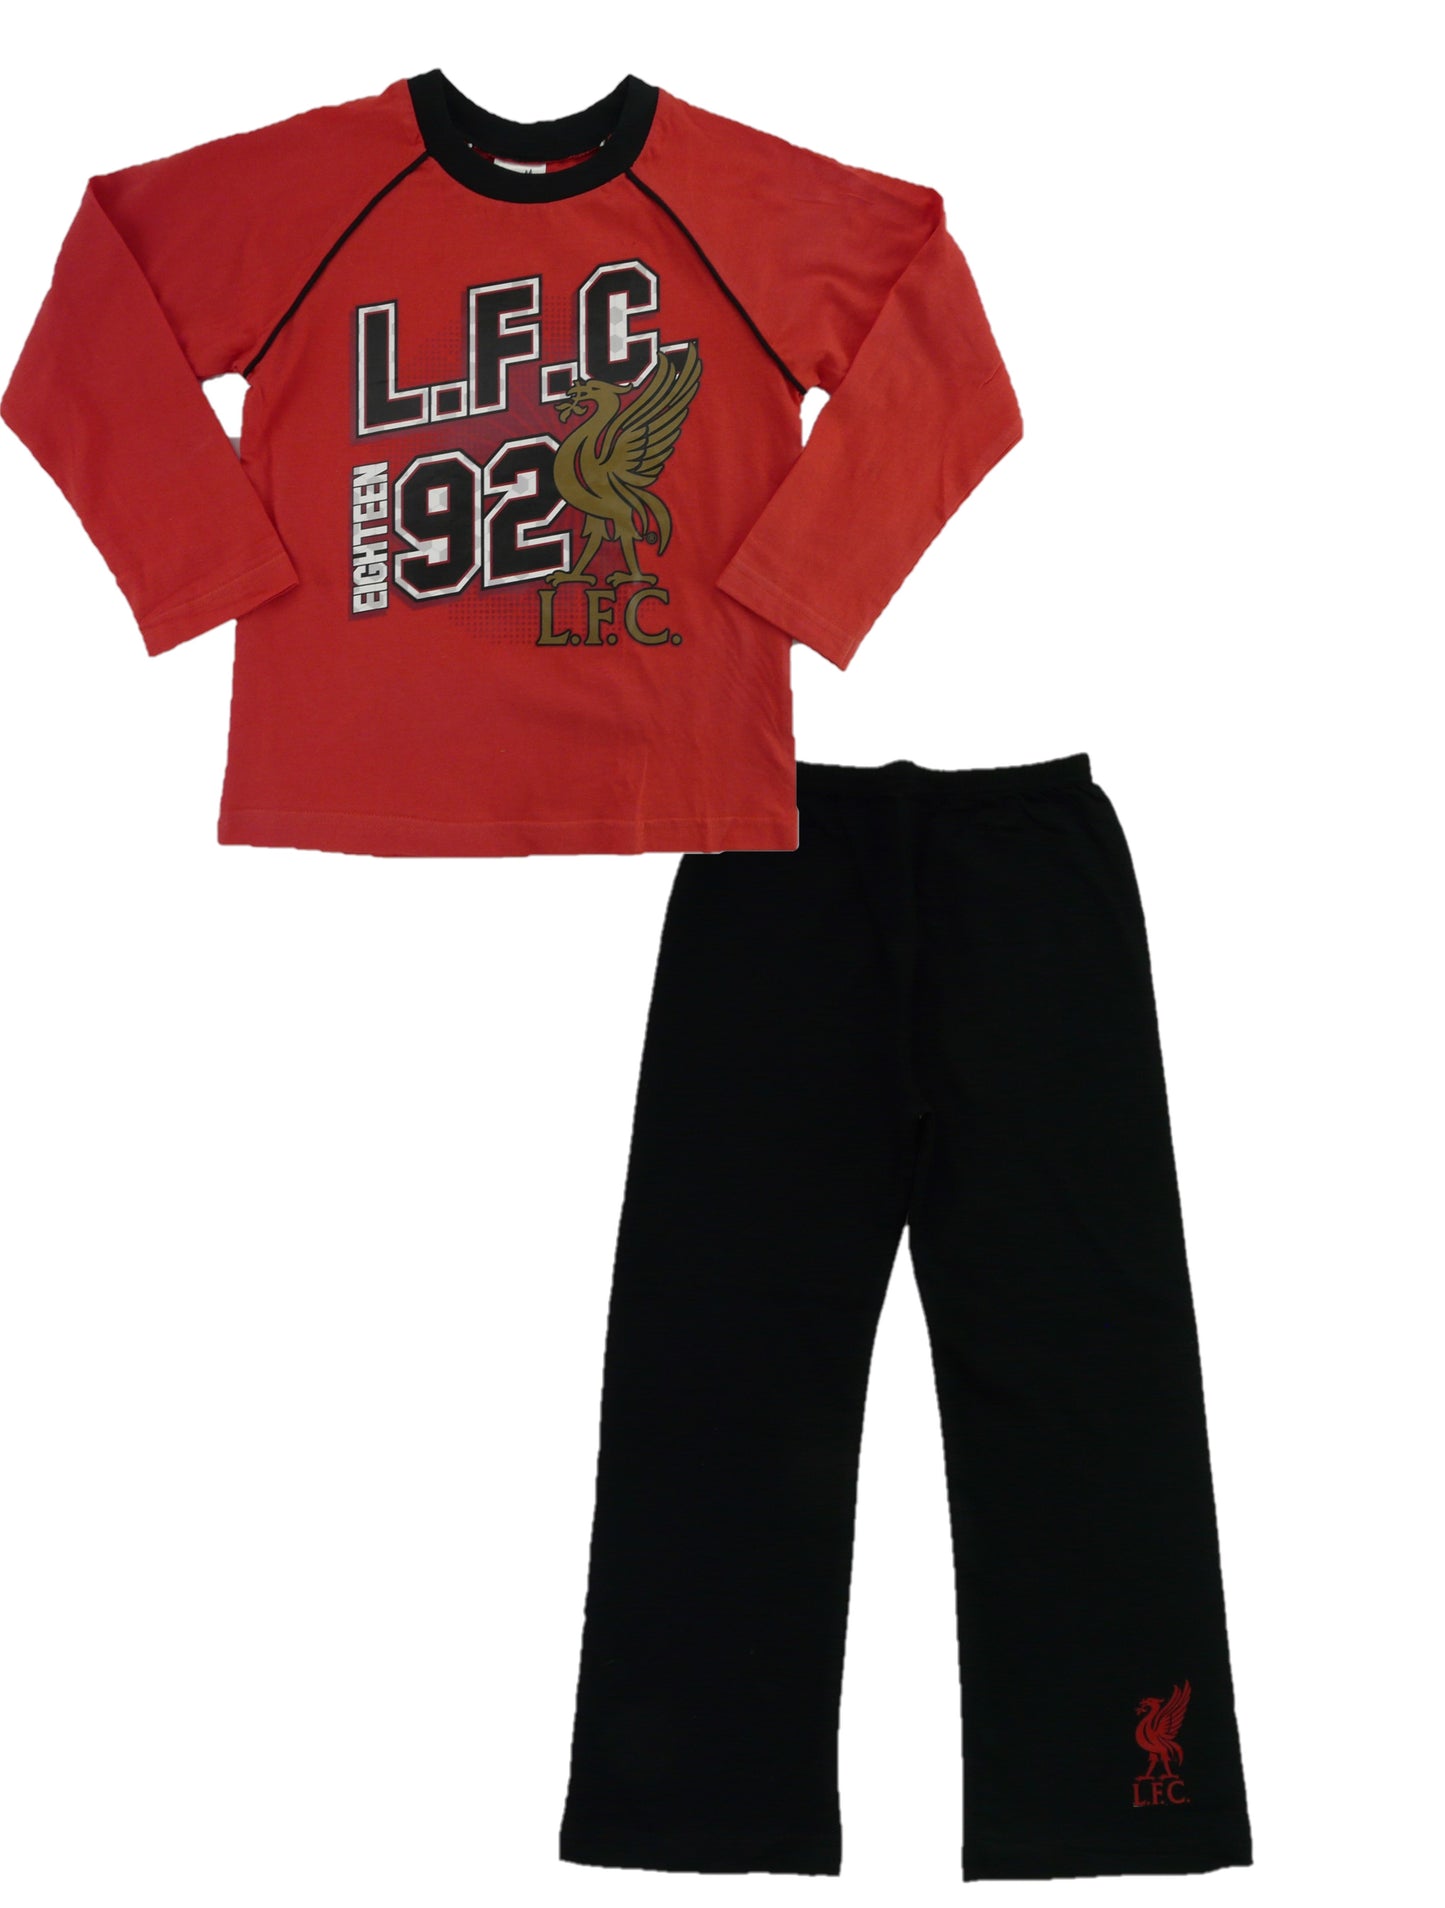 Liverpool Football Club LFC Children's Cotton Pyjamas 4-6 Years Available